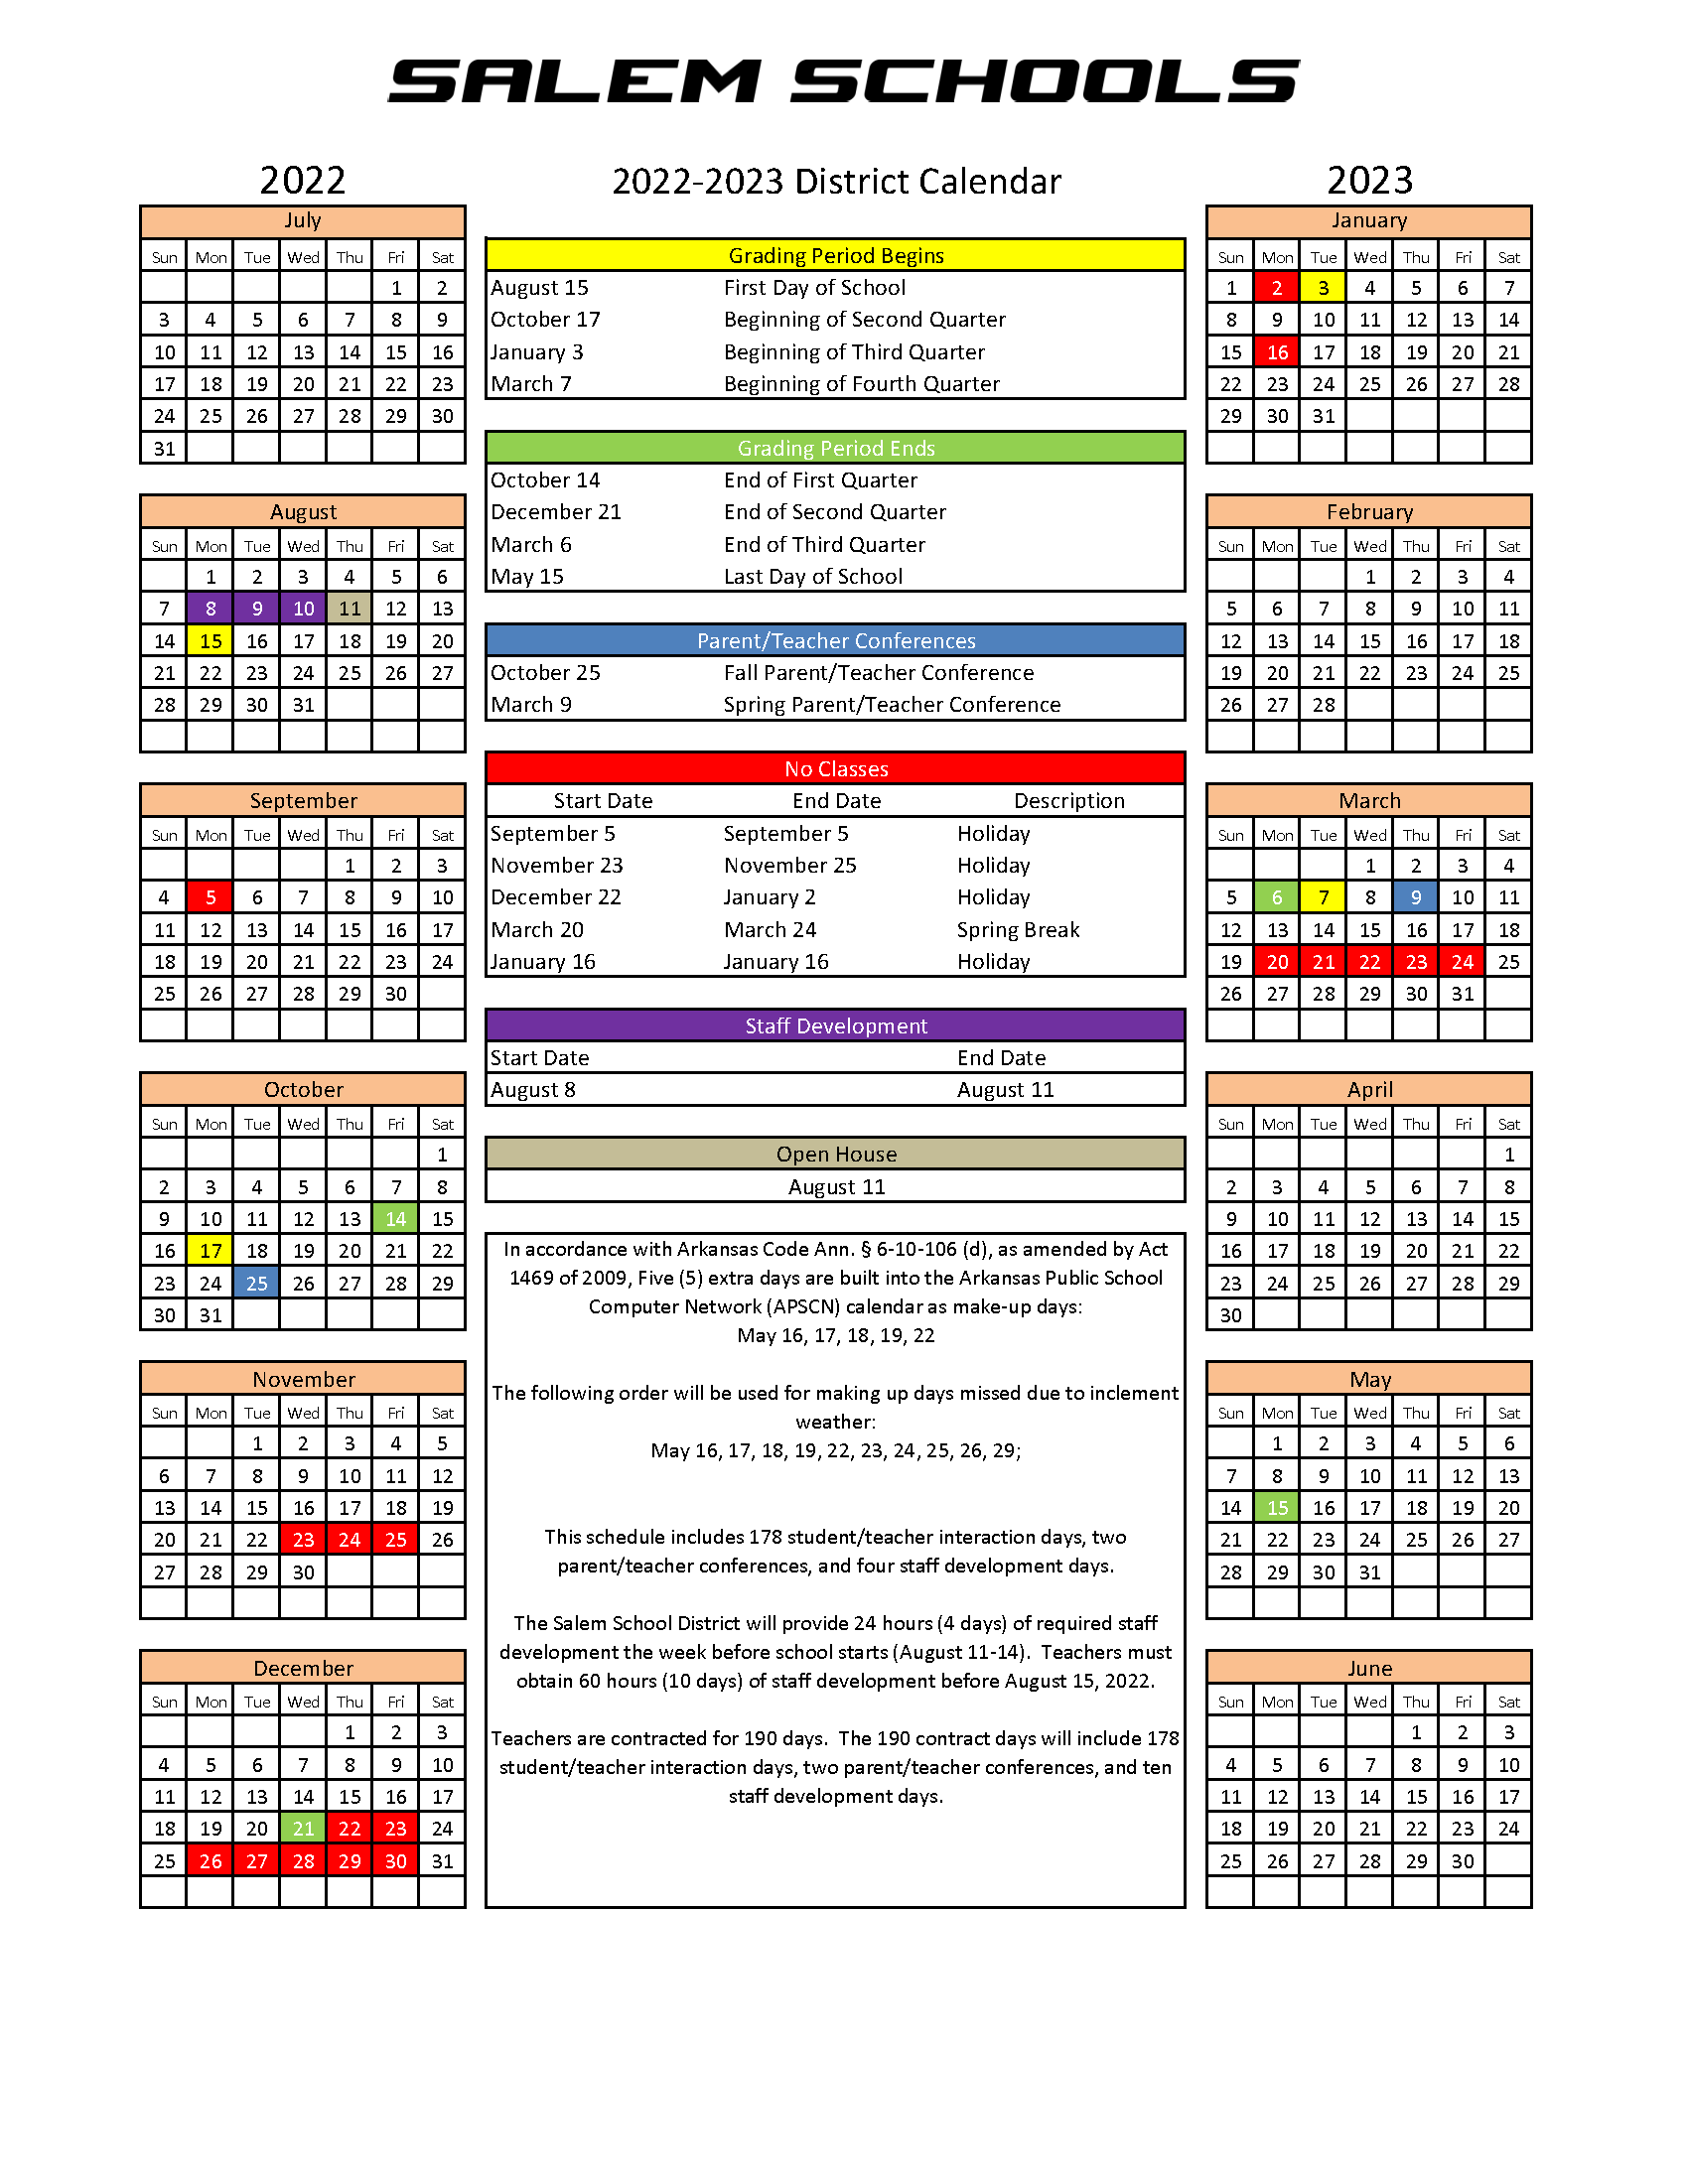 Salem Schools Calendar 2022 2023 